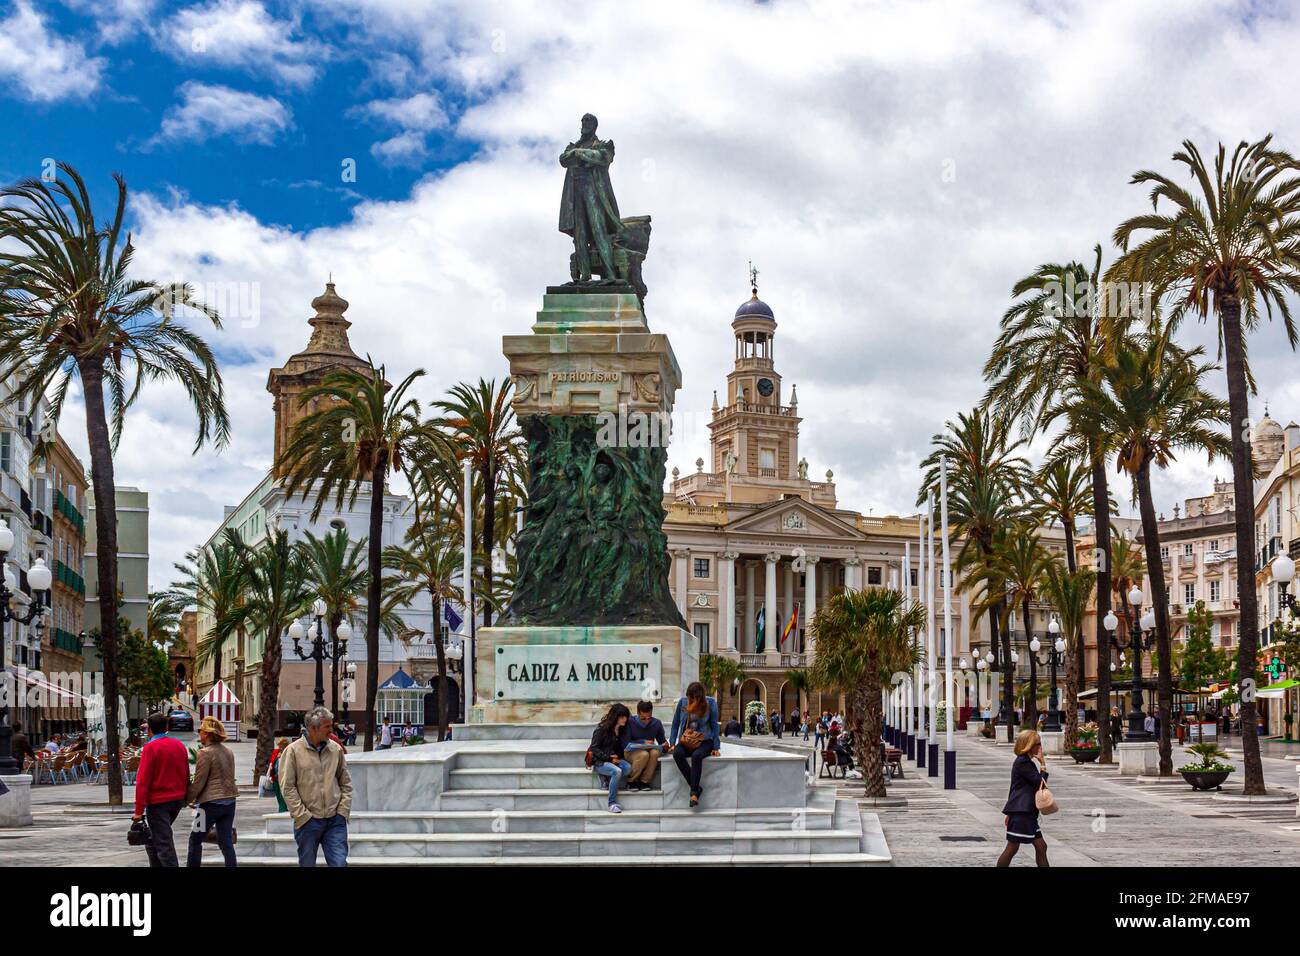 Cadiz, Andalusien, Spanien - 17. Mai 2013: Cadiz a Moret Monument und Rathaus auf der Plaza San Juan de Dios. Stockfoto